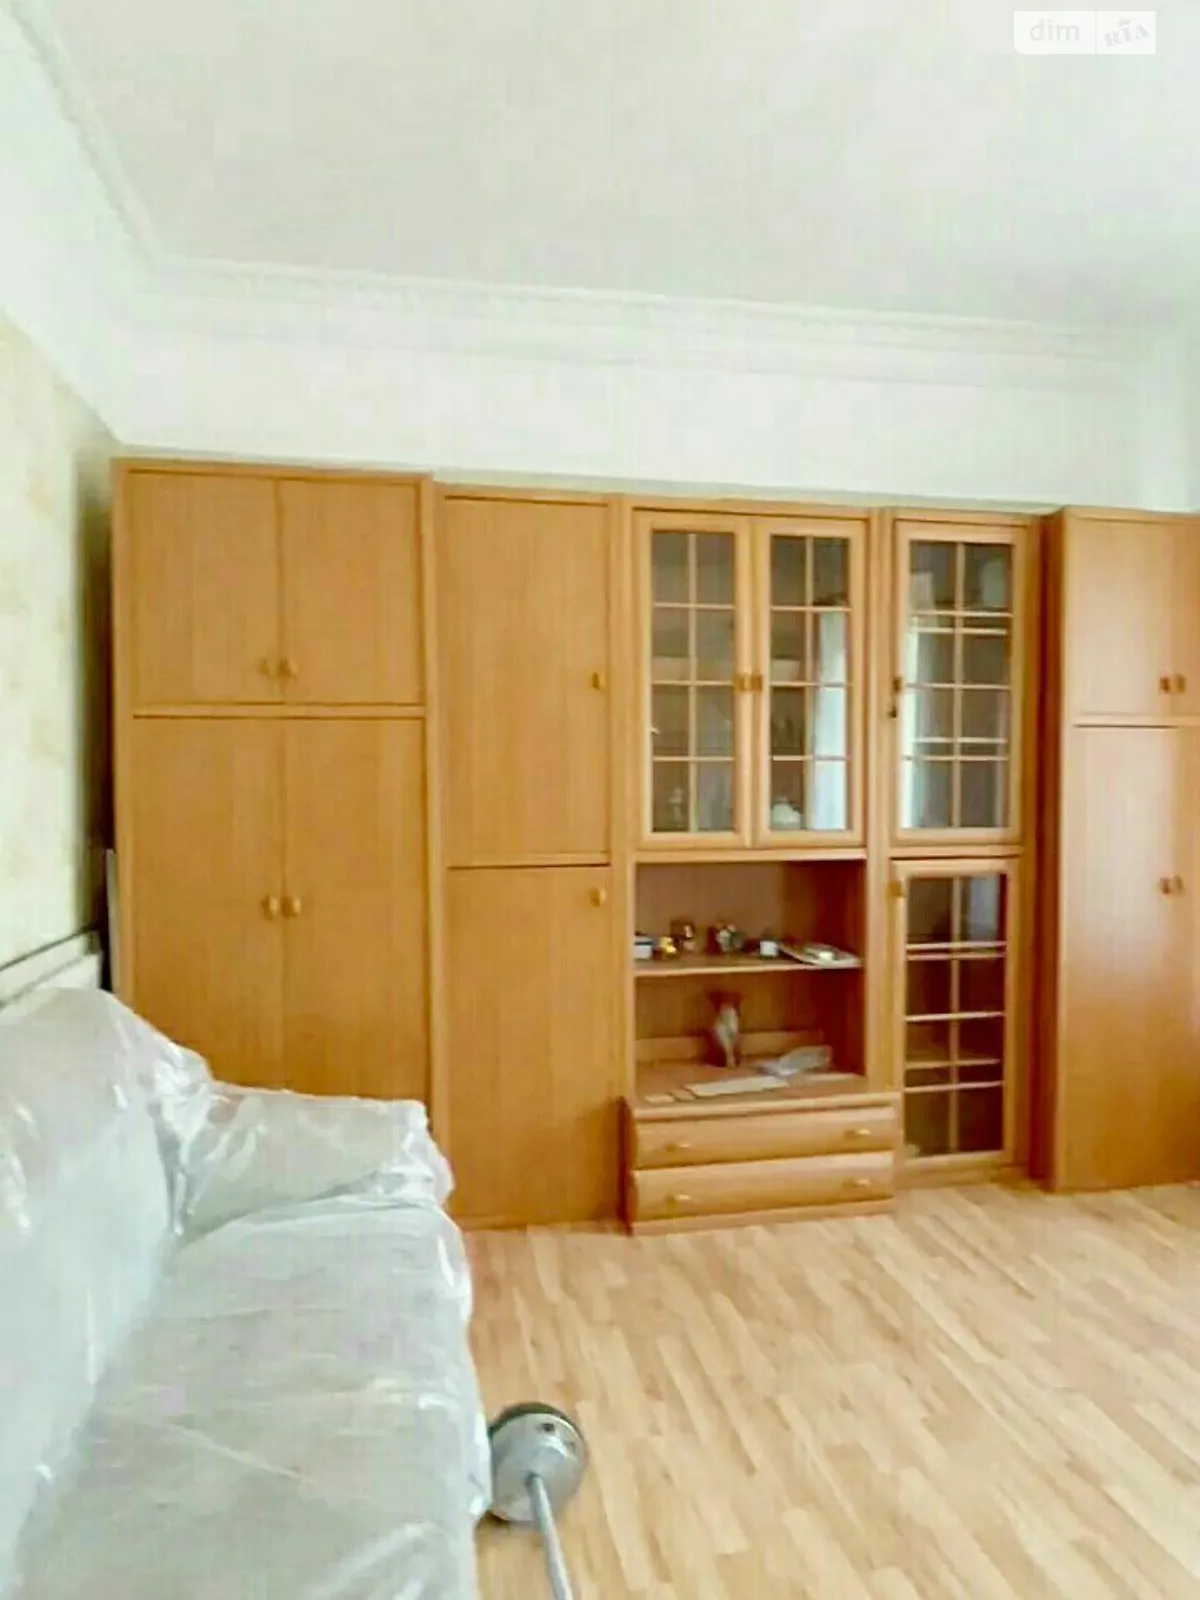 Продается комната 32 кв. м в Одессе, цена: 10500 $ - фото 1